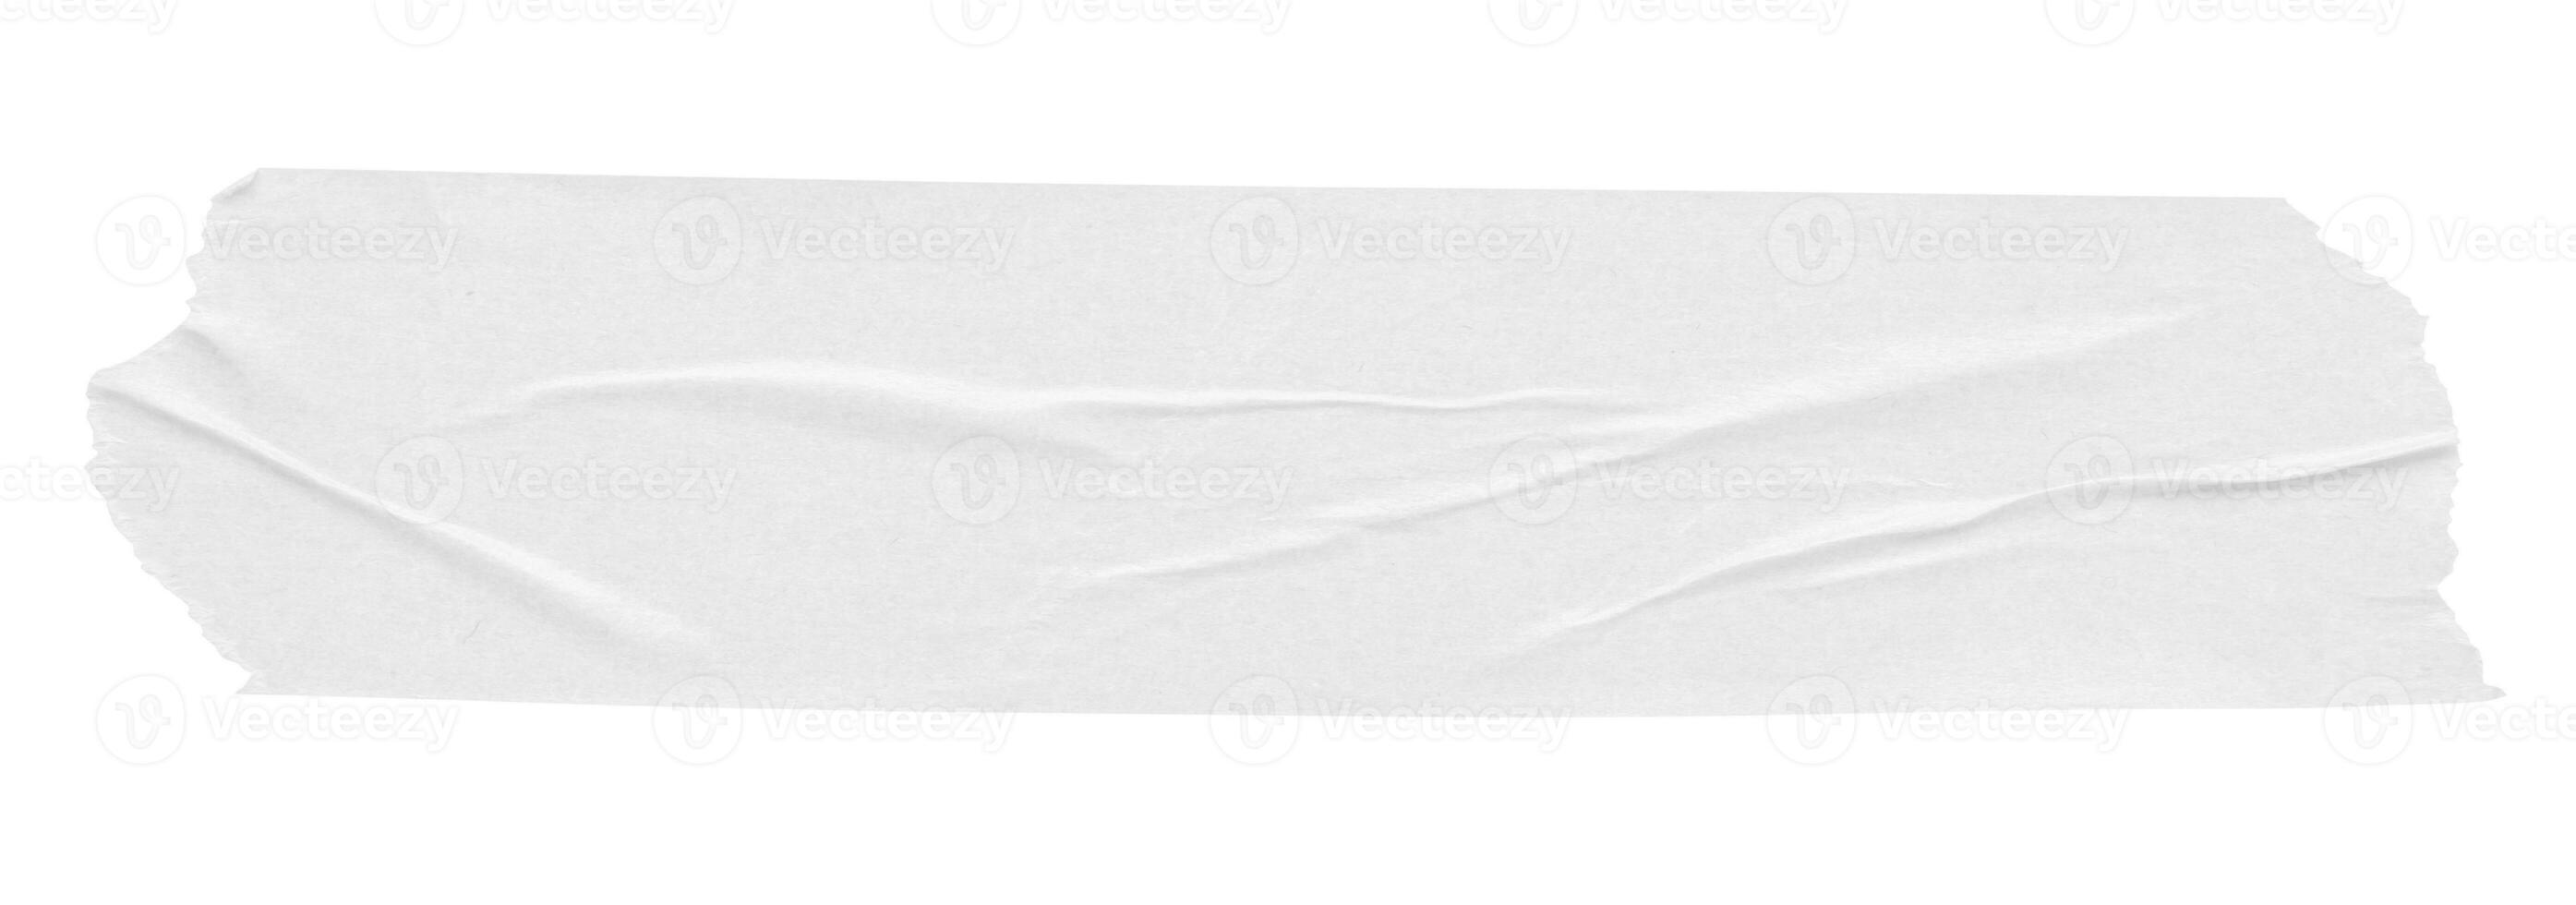 vit lim papper tejp isolerat på vit bakgrund foto